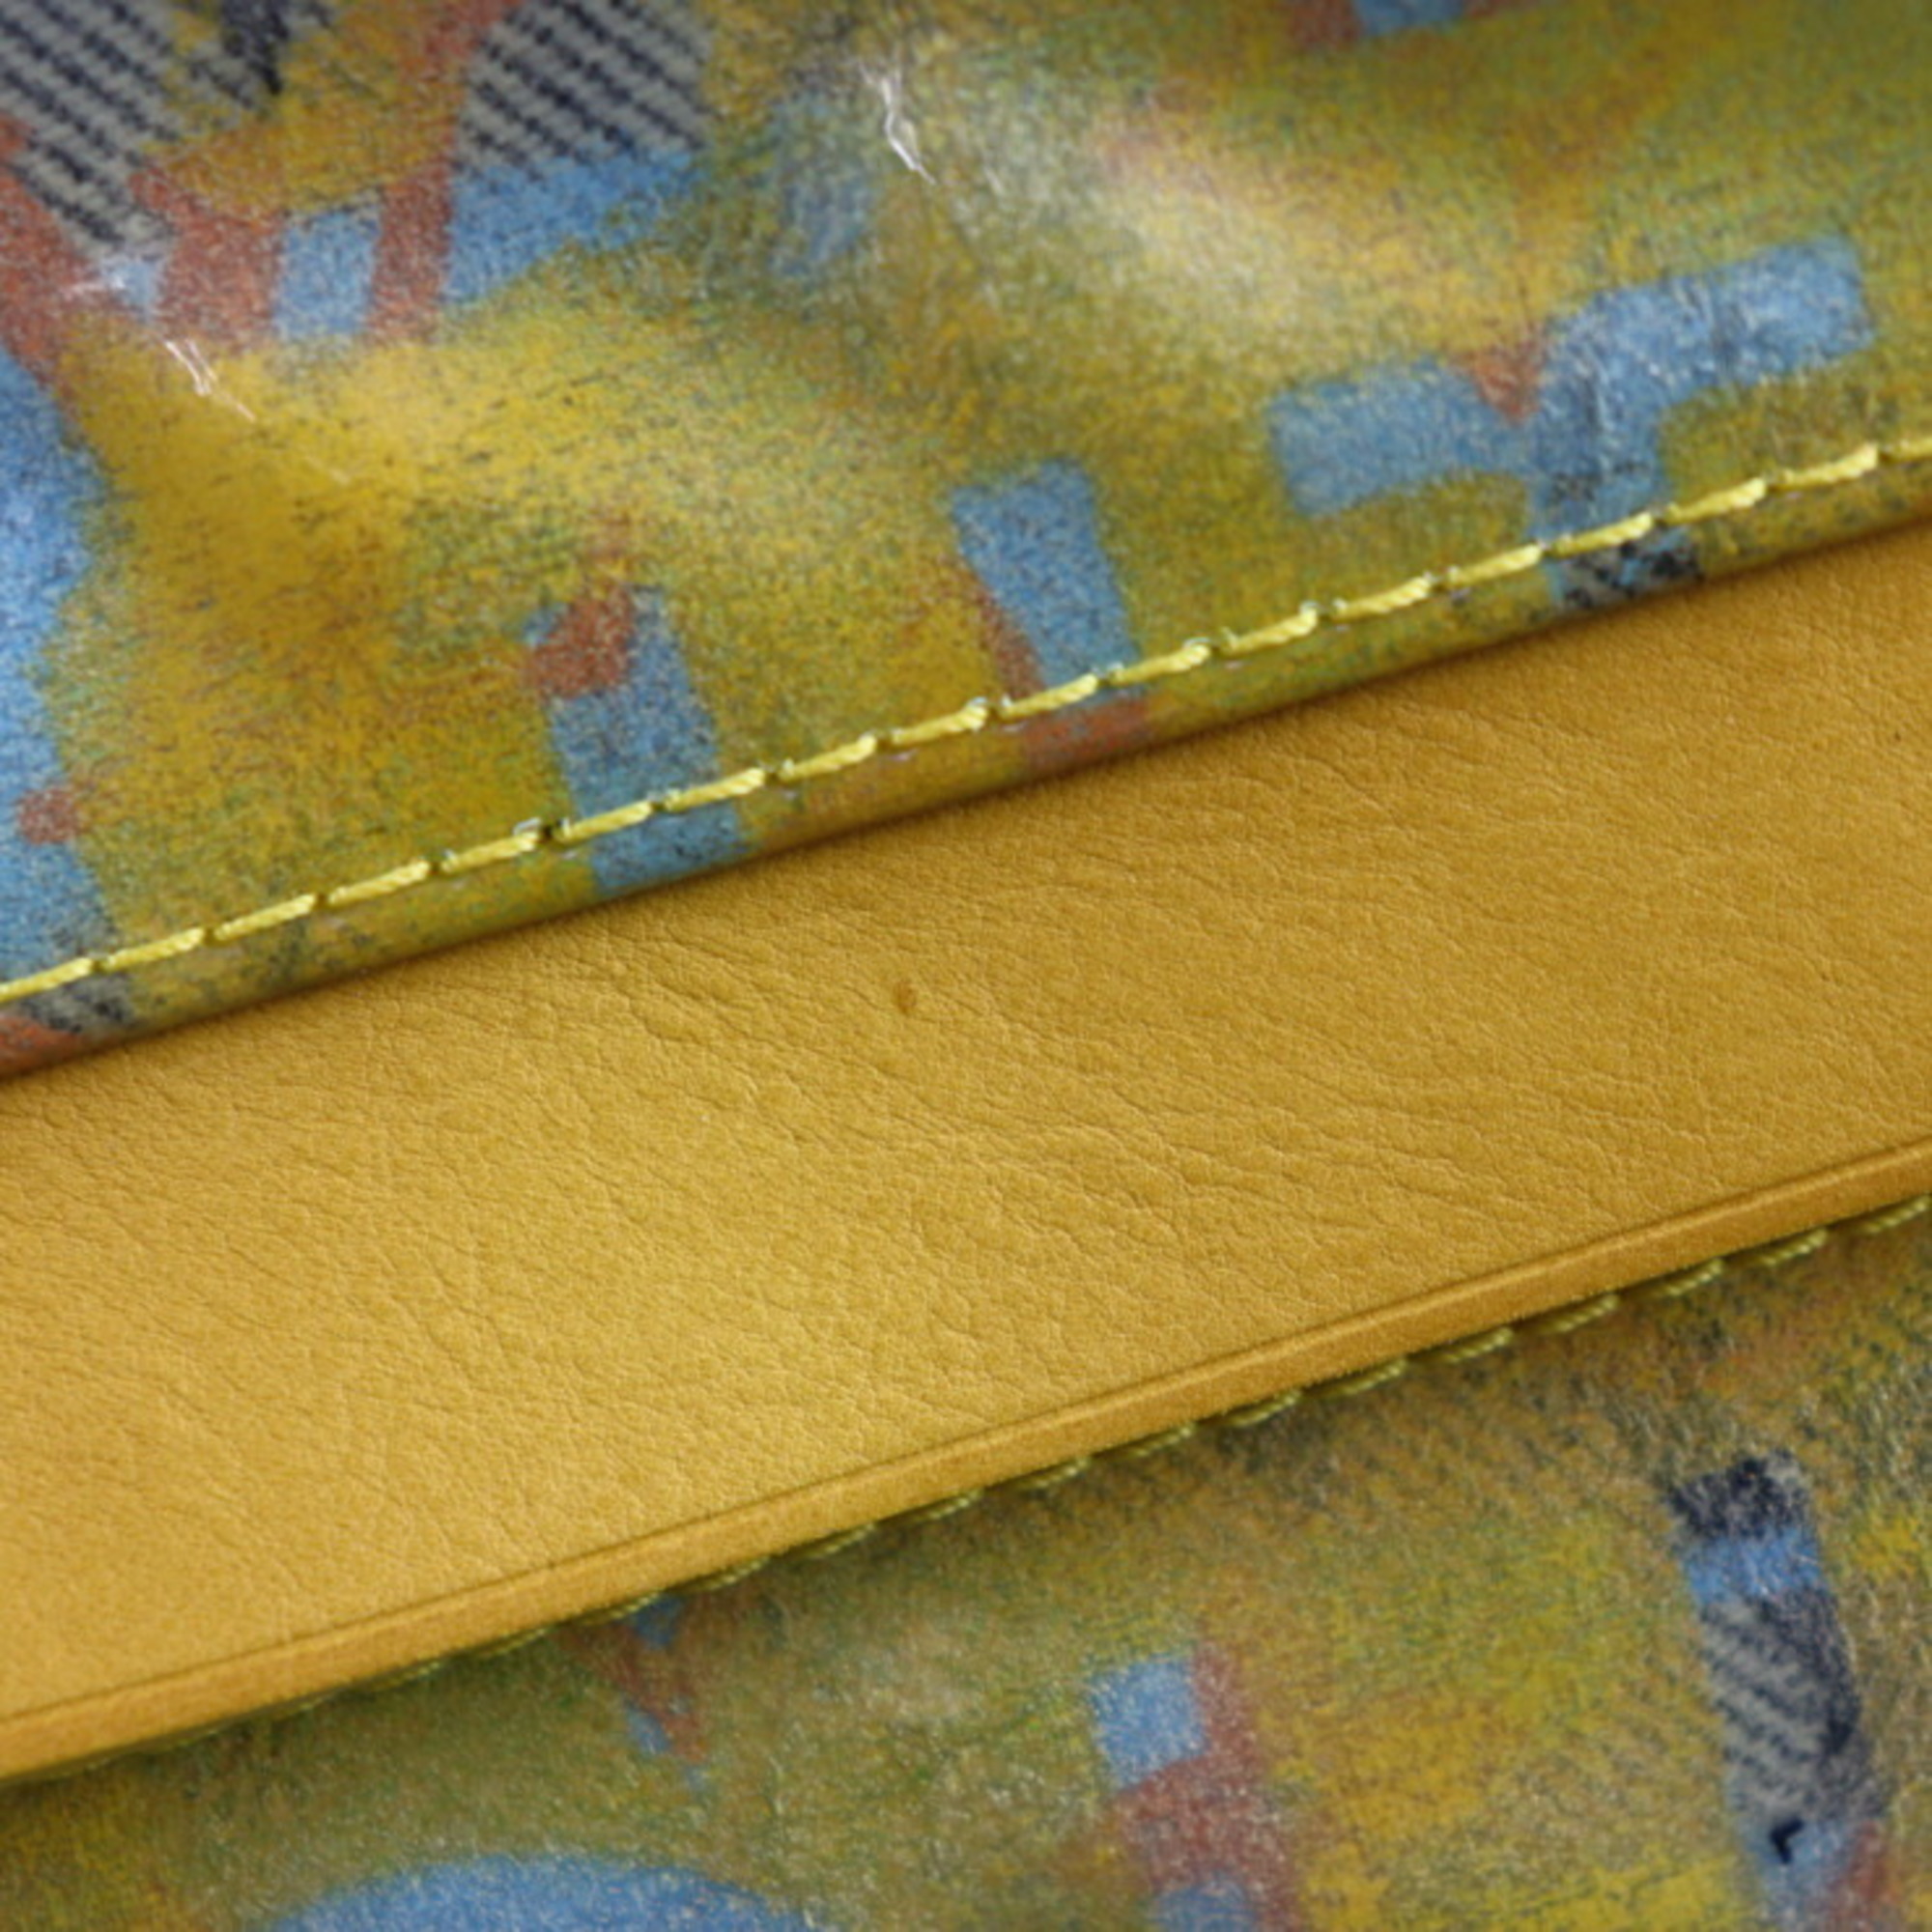 LOUIS VUITTON Weekender GM Monogram Pulp Boston Bag M95735 Coated Canvas Leather Jaune Multicolor Gold Hardware Handbag Travel Vuitton